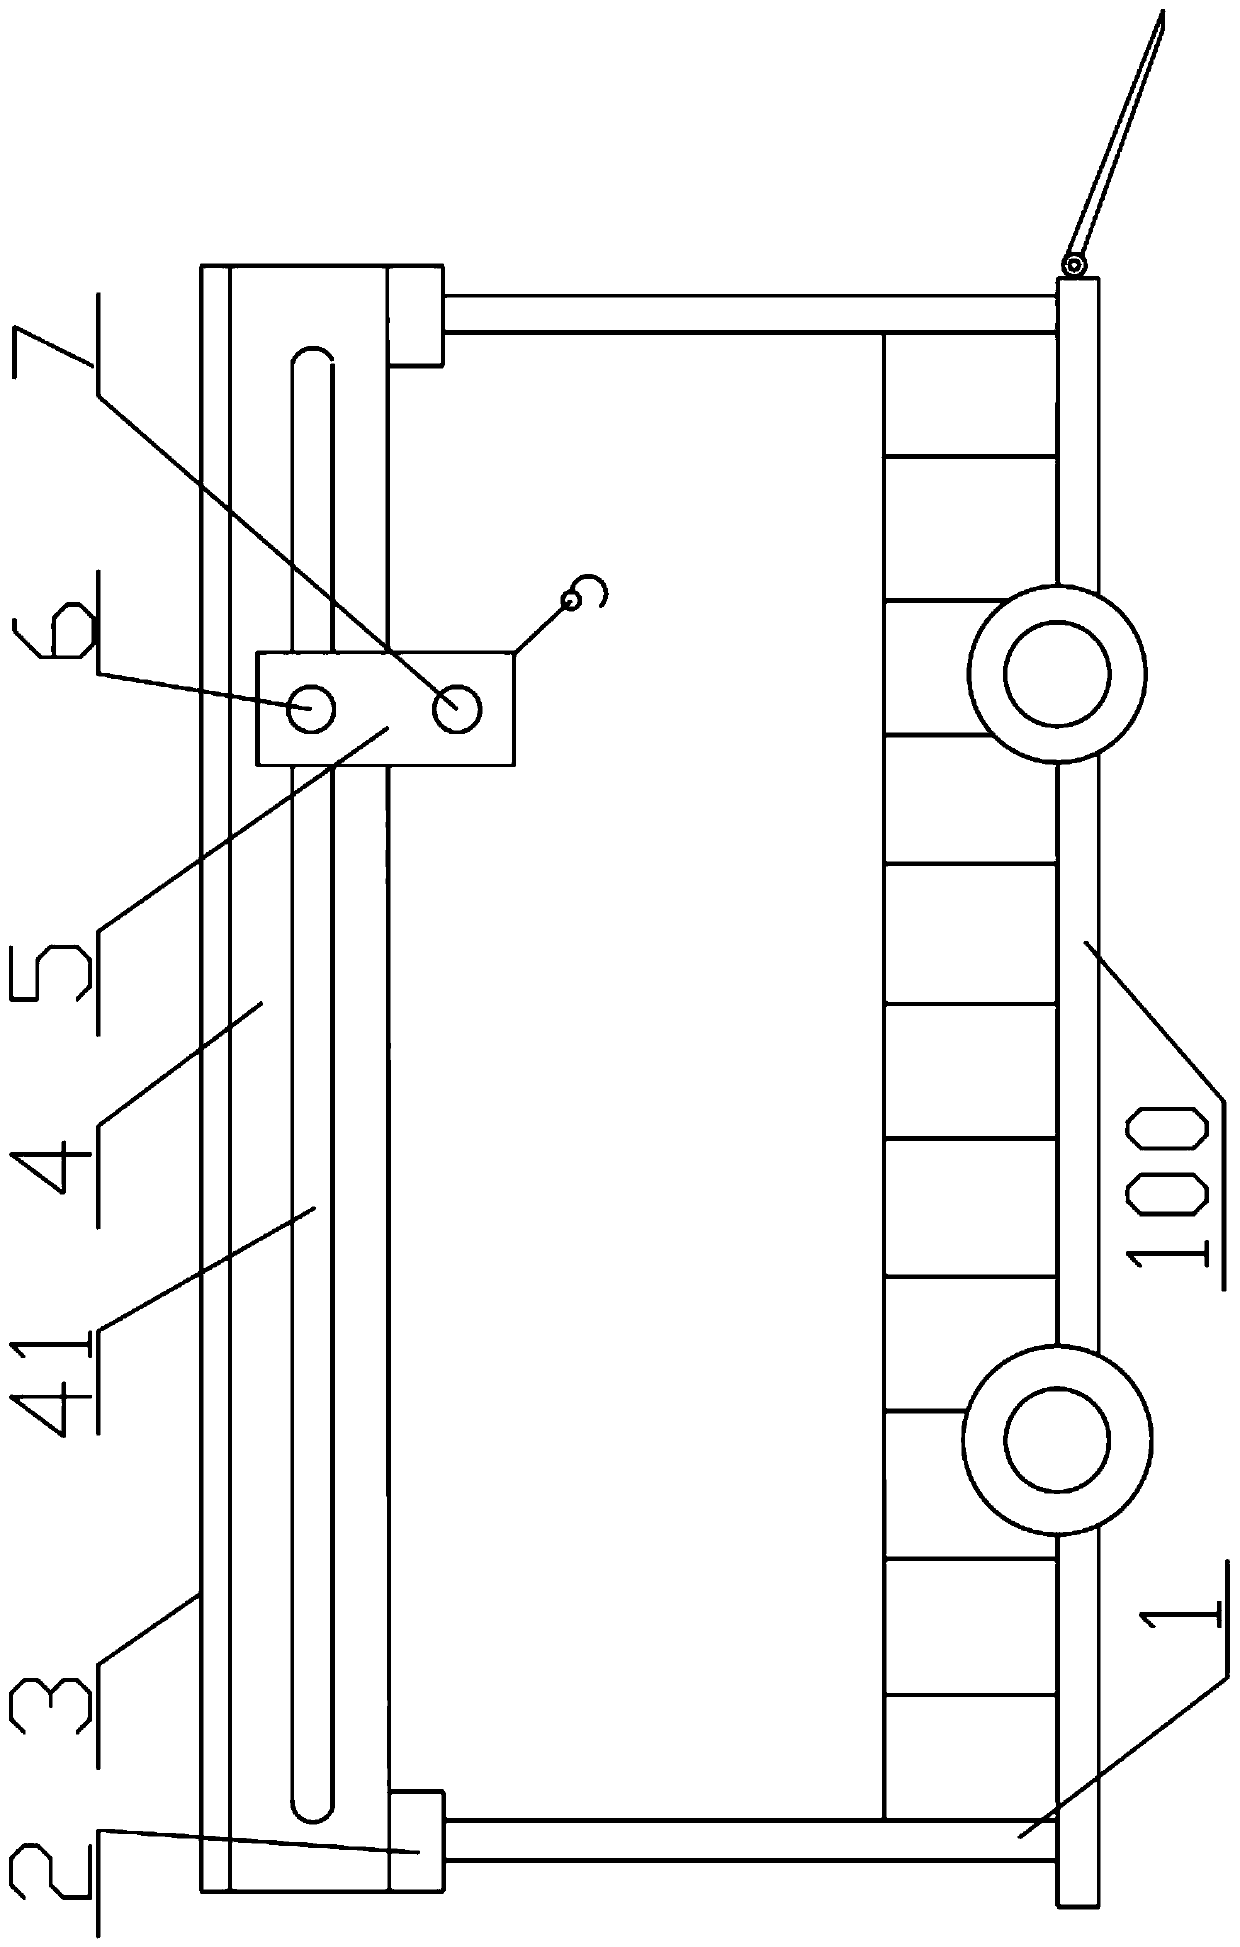 Longitudinal beam type transfer vehicle structure